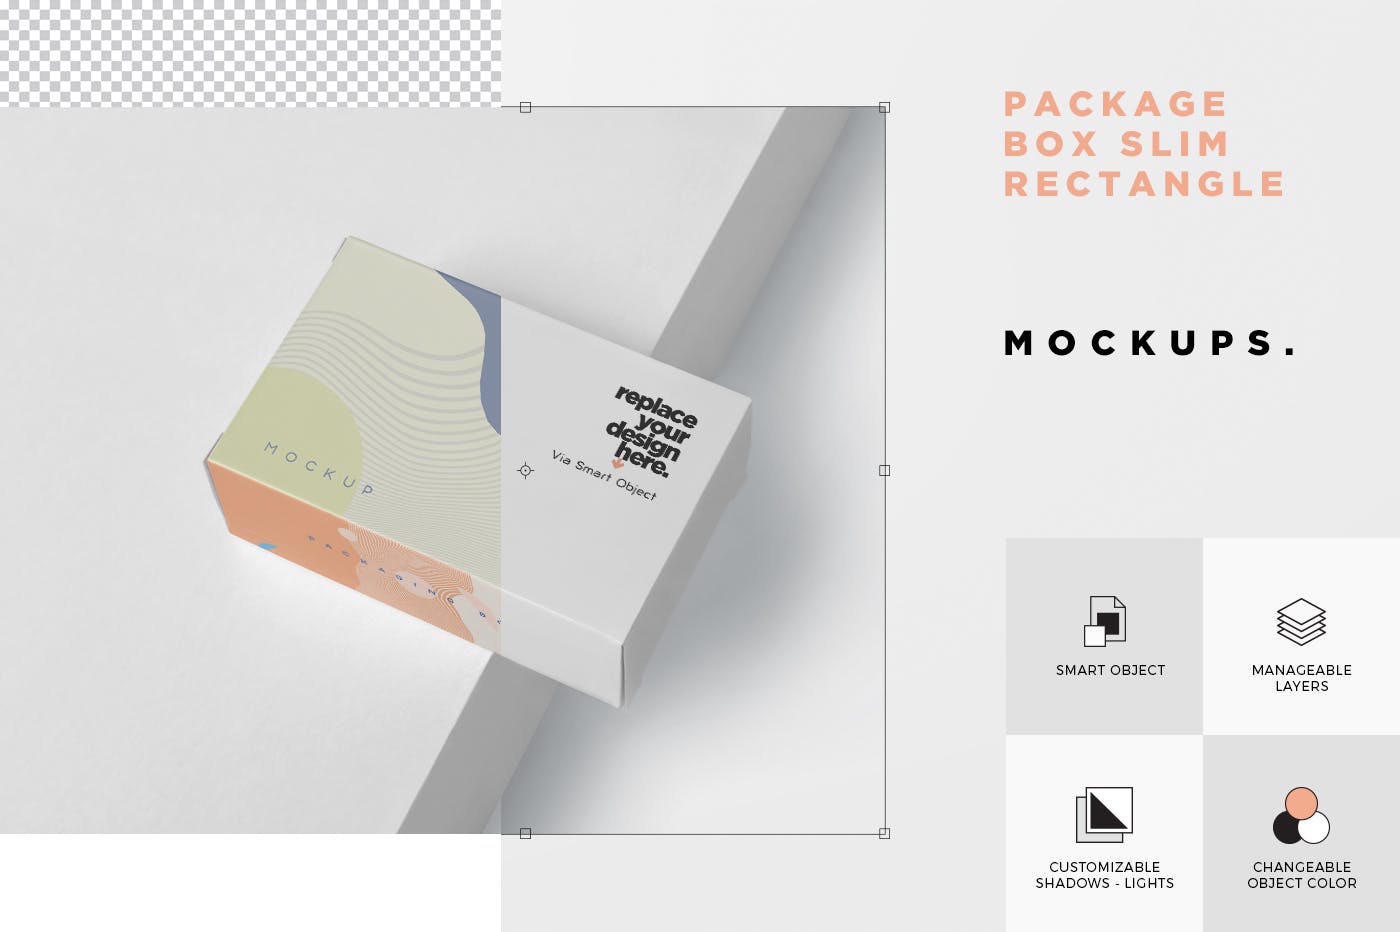 扁平矩形产品包装盒效果图16图库精选 Package Box Mockup – Slim Rectangle Shape插图(6)